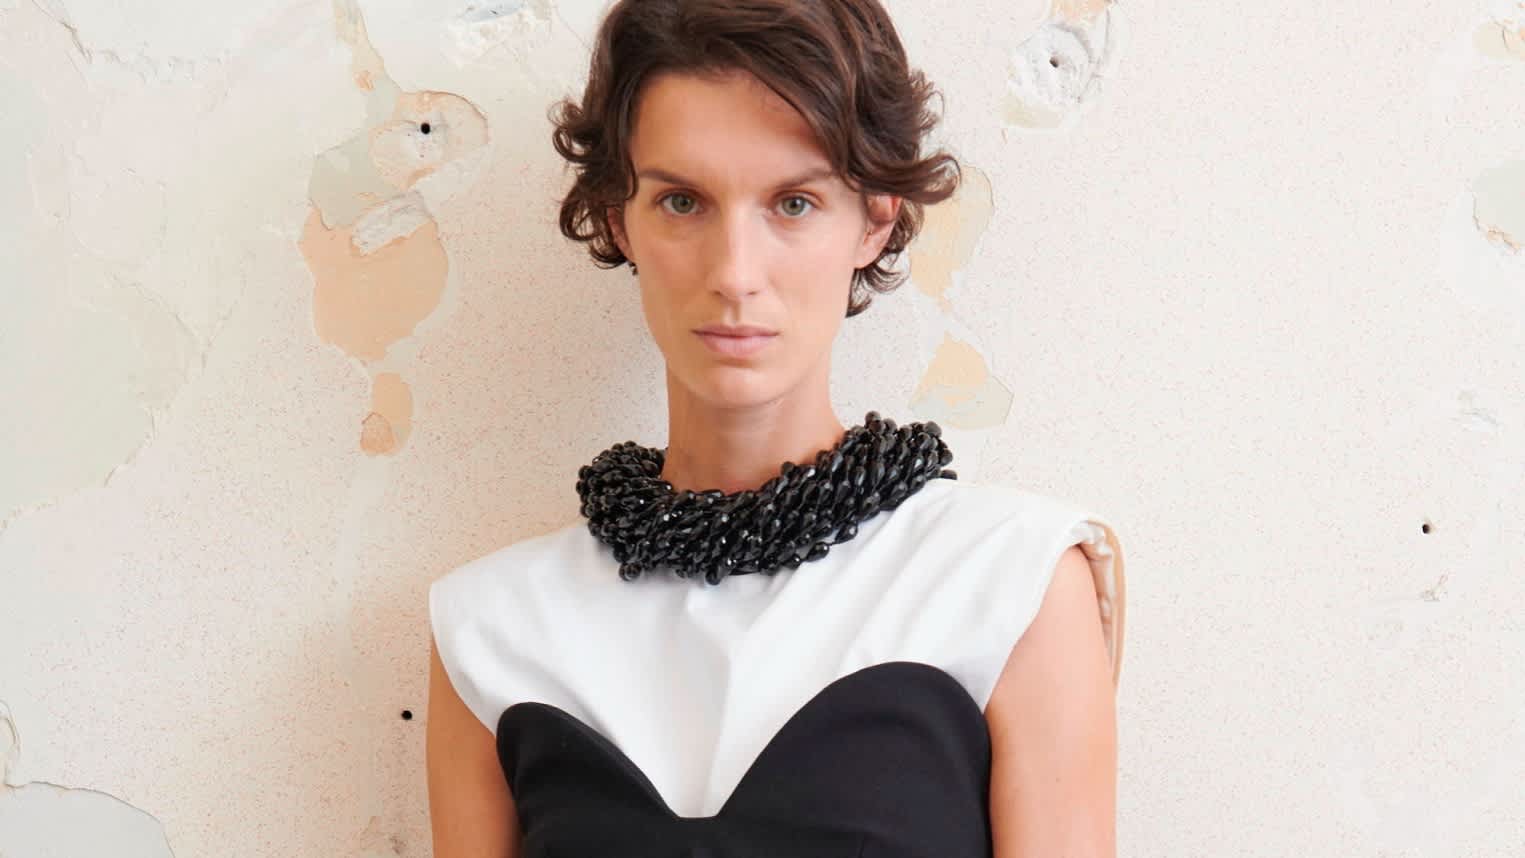 Female model wearing a black and white dress